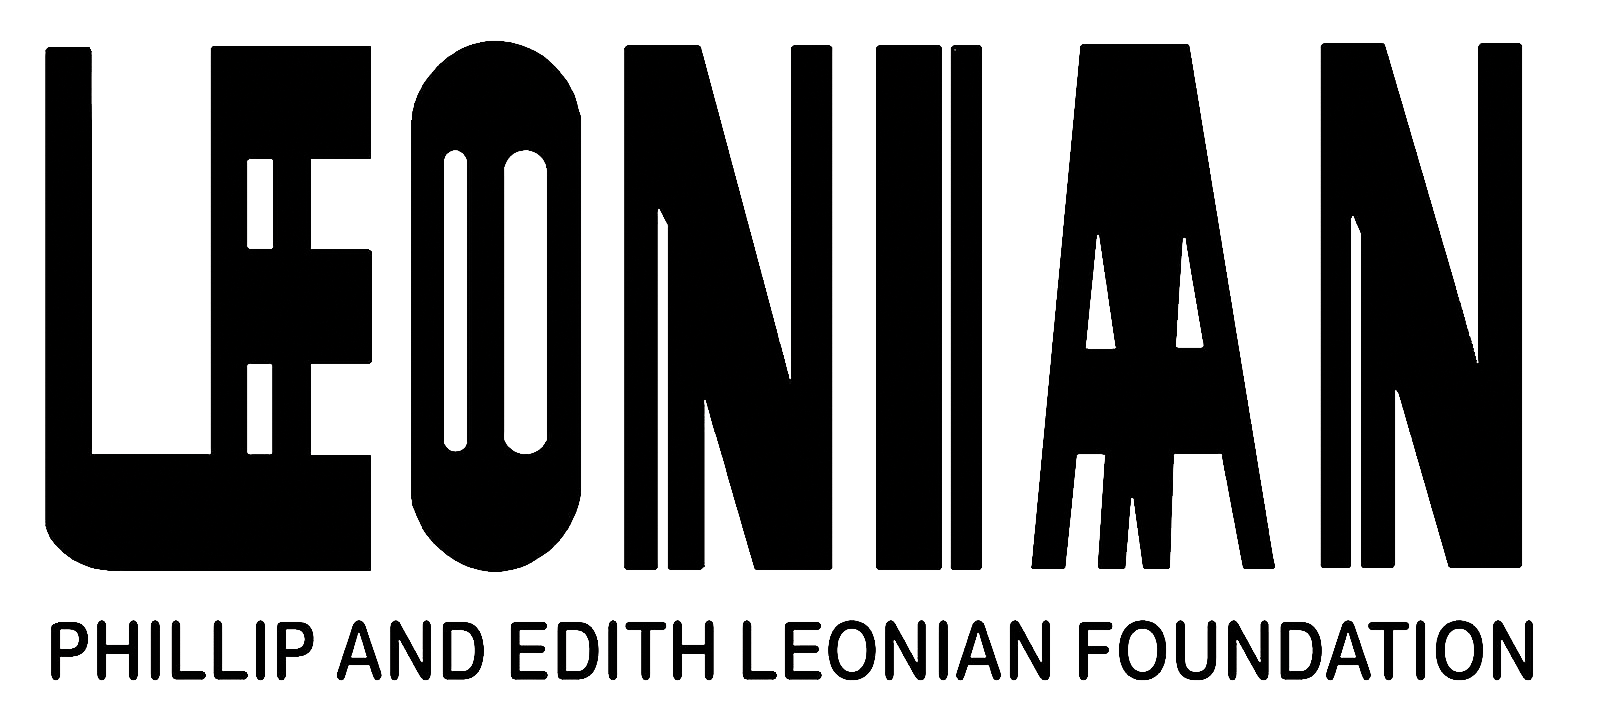 08_Phillip-and-Edith-Leonian-Foundation_Logo